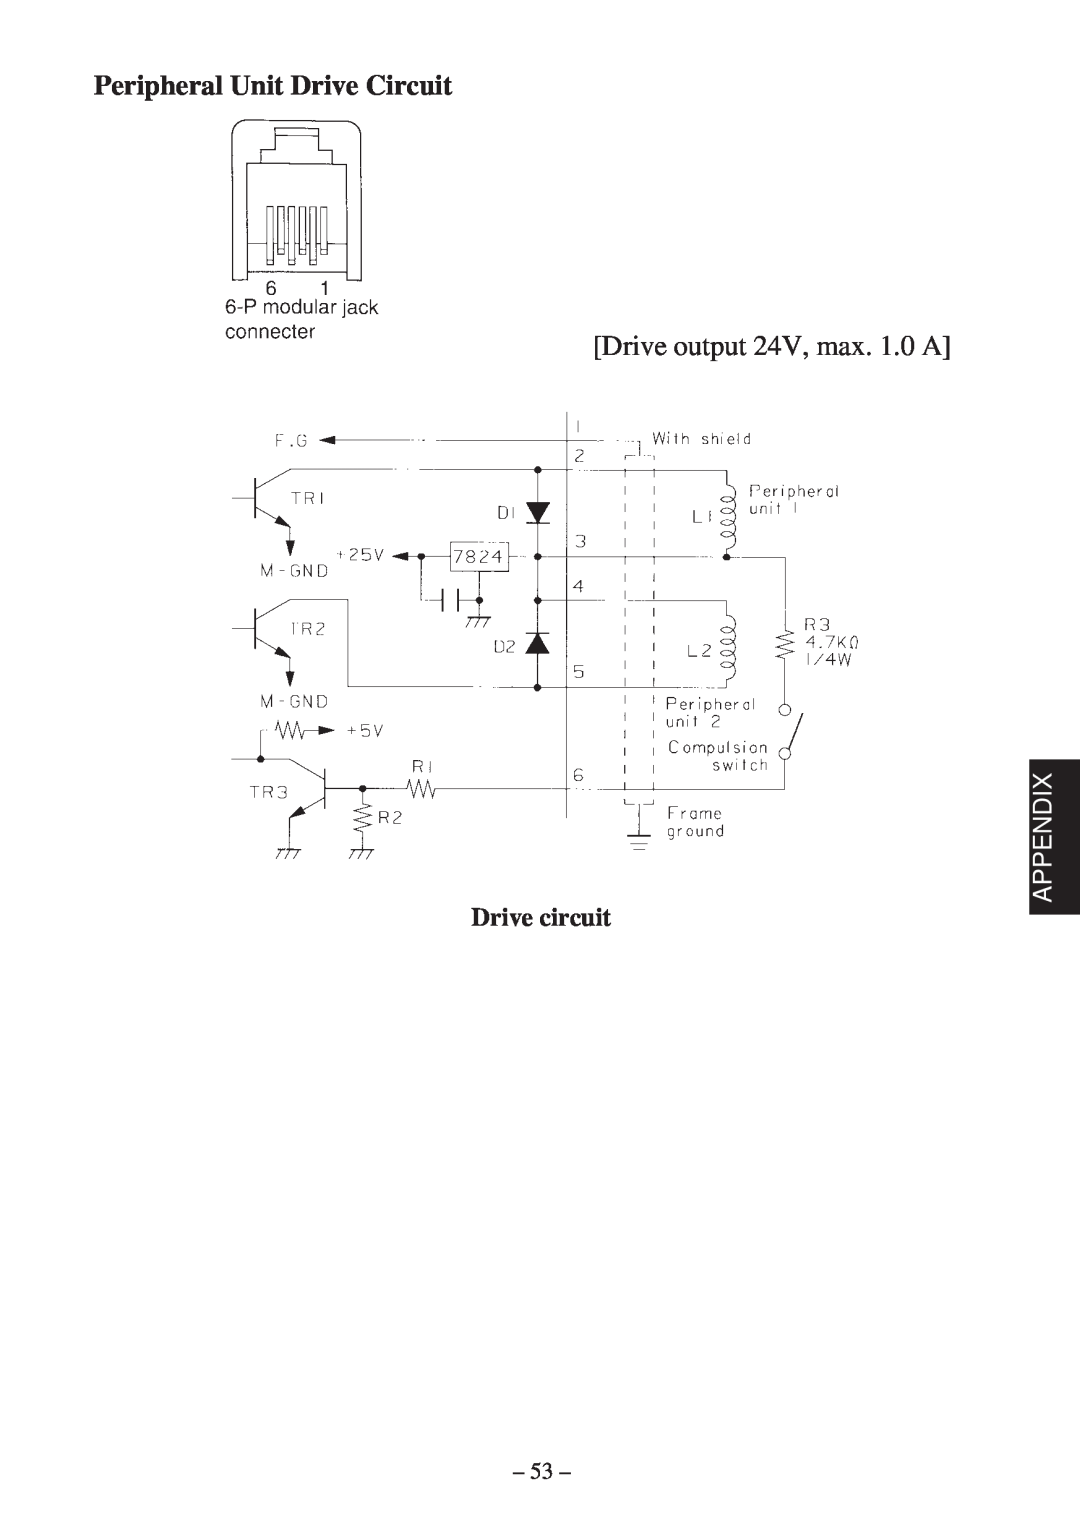 Star Micronics 347F user manual Peripheral Unit Drive Circuit, Drive output 24V, max. 1.0 A, Appendix, Drive circuit 